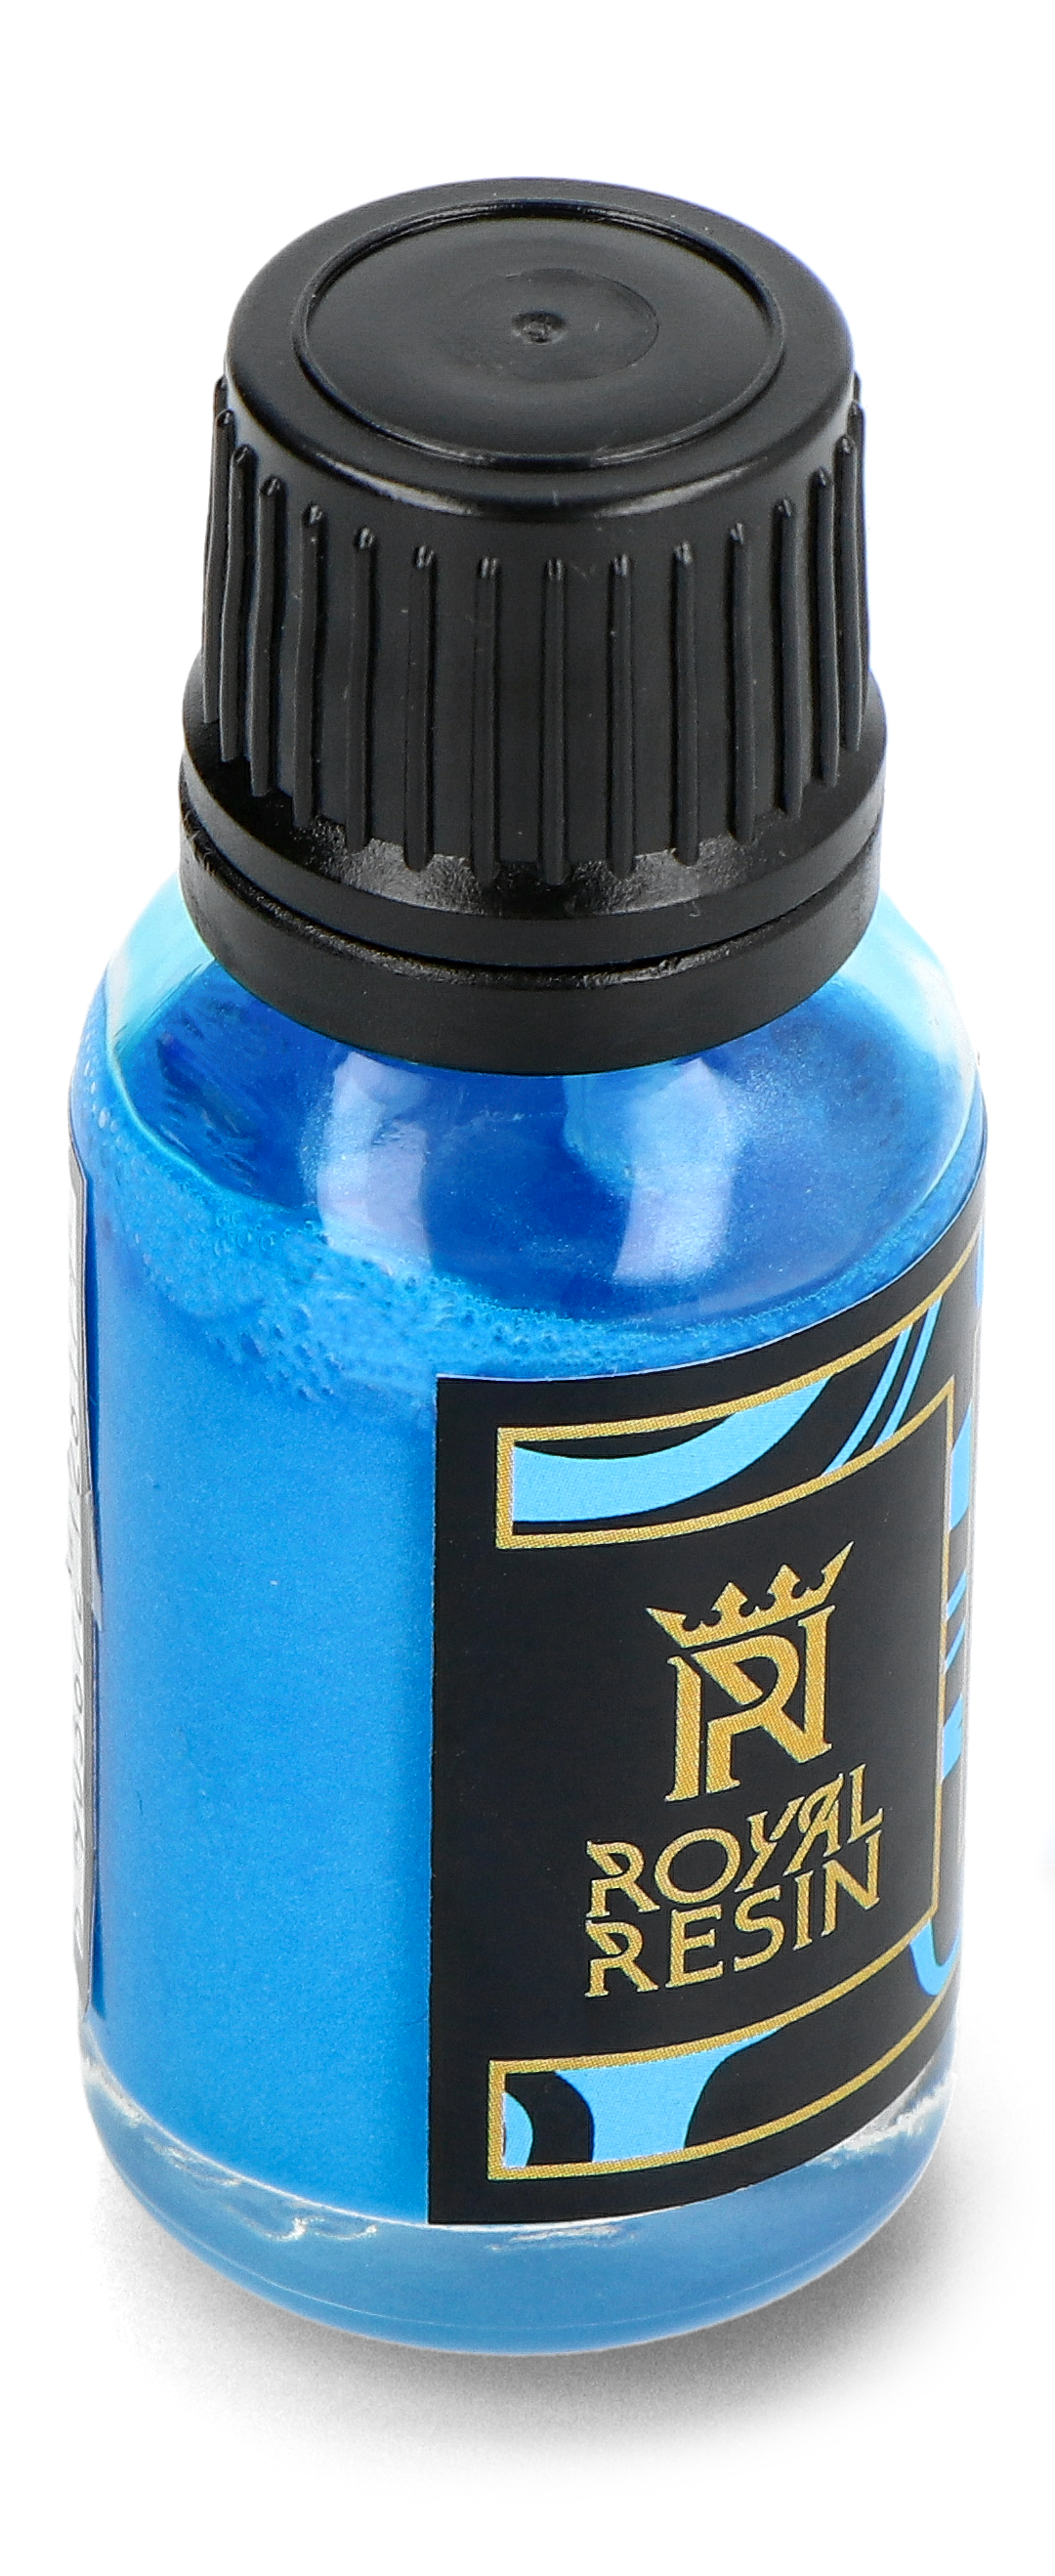 Royal Resin Crystal epoxy resin dye - pearl liquid - 15ml - gold